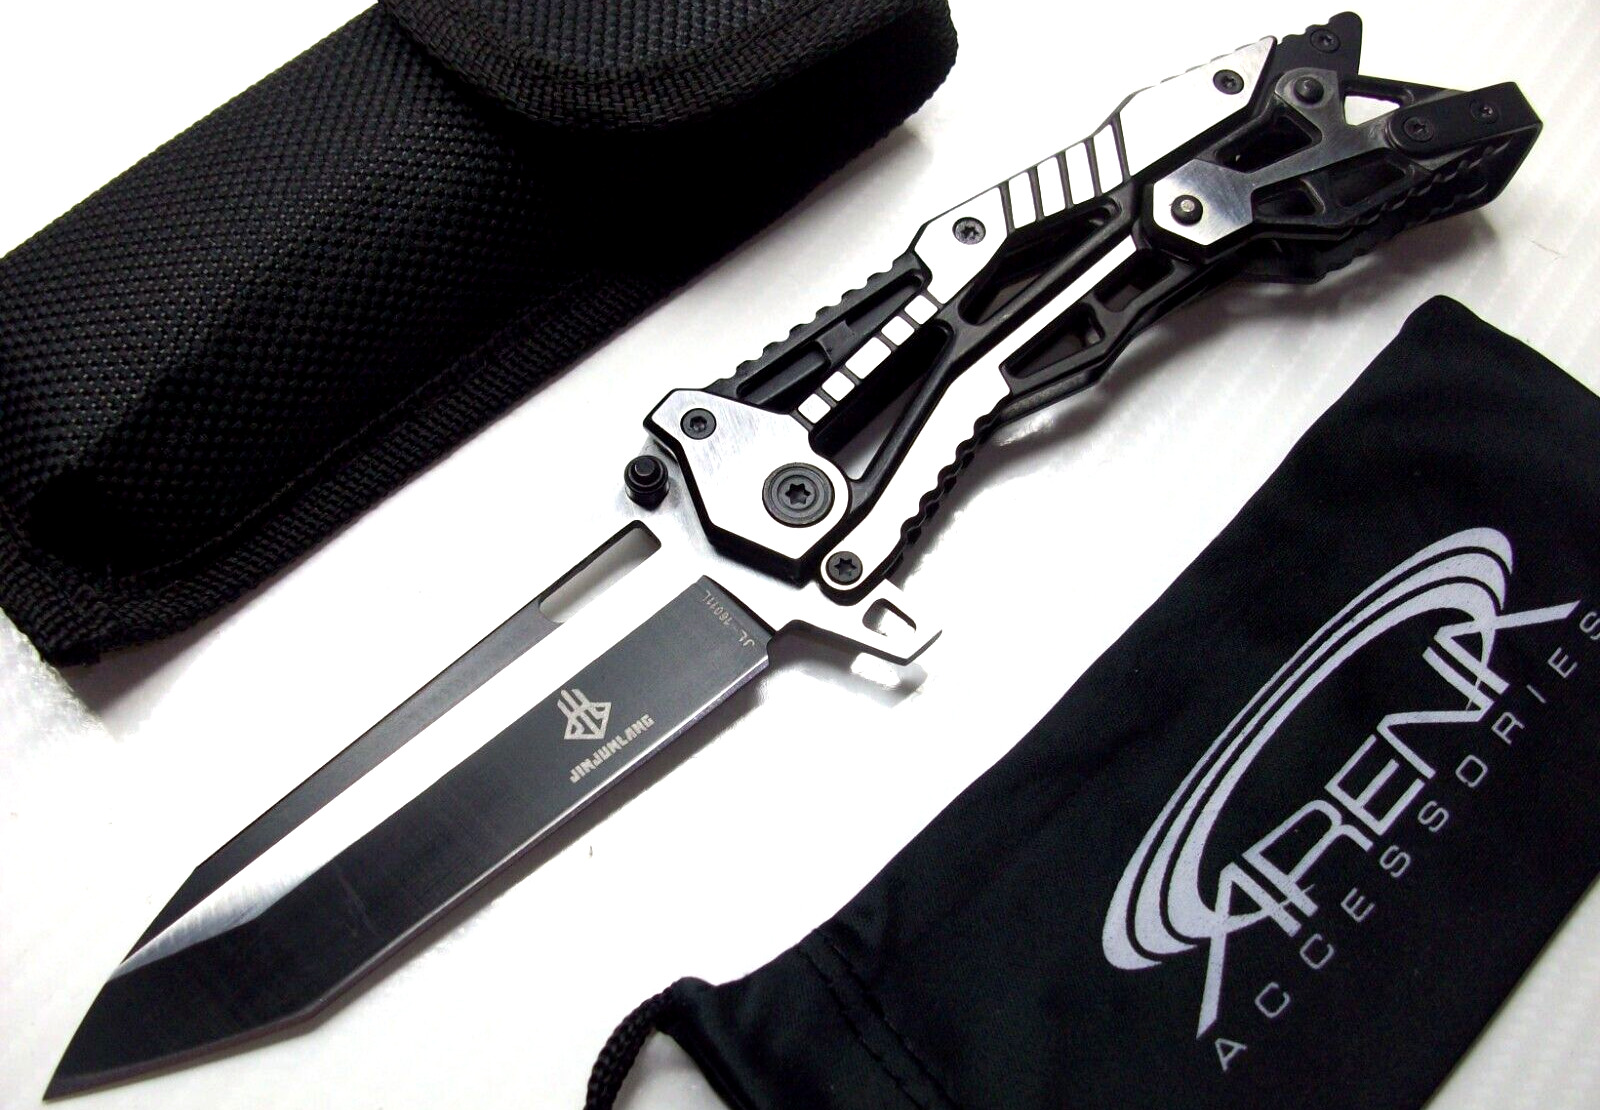 Jin Jun Lang Unique Manual Mechanical Lock Pocket Knife EDC Blade Tip-Up Carry